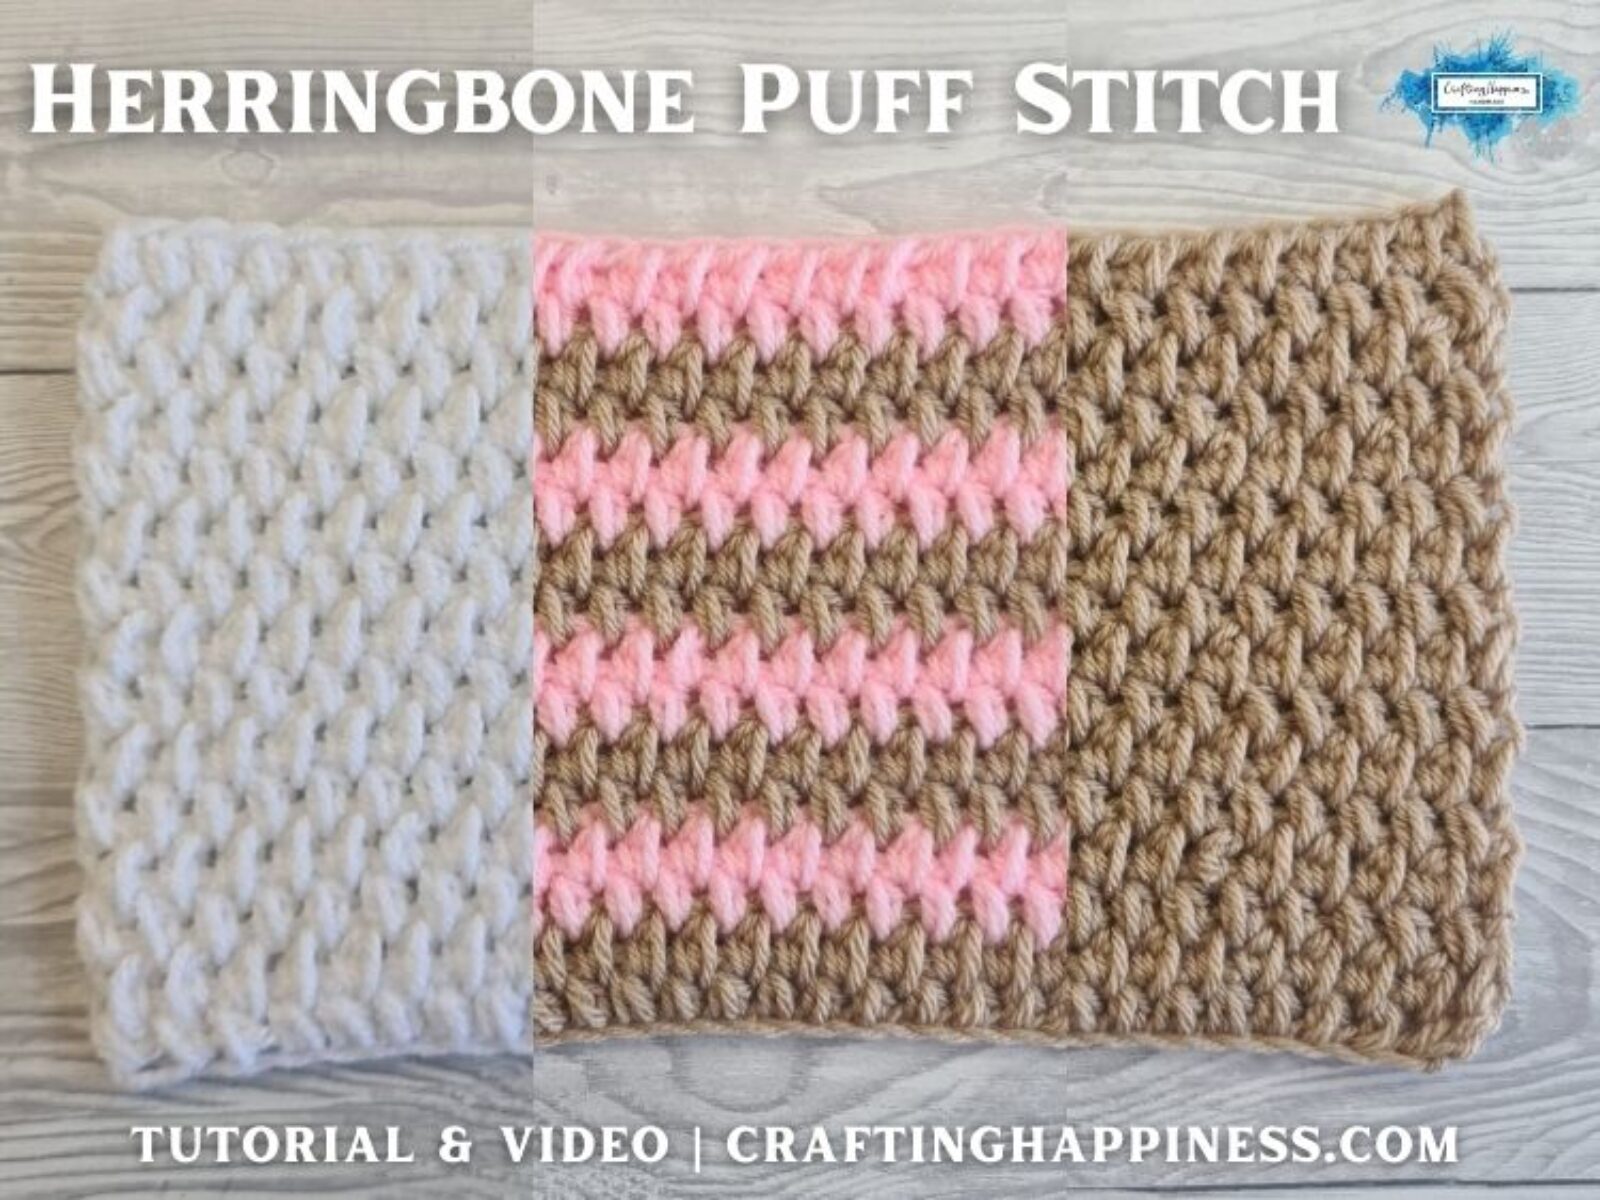 FB BLOG POSTER - Herringbone Puff Stitch Crafting Happiness